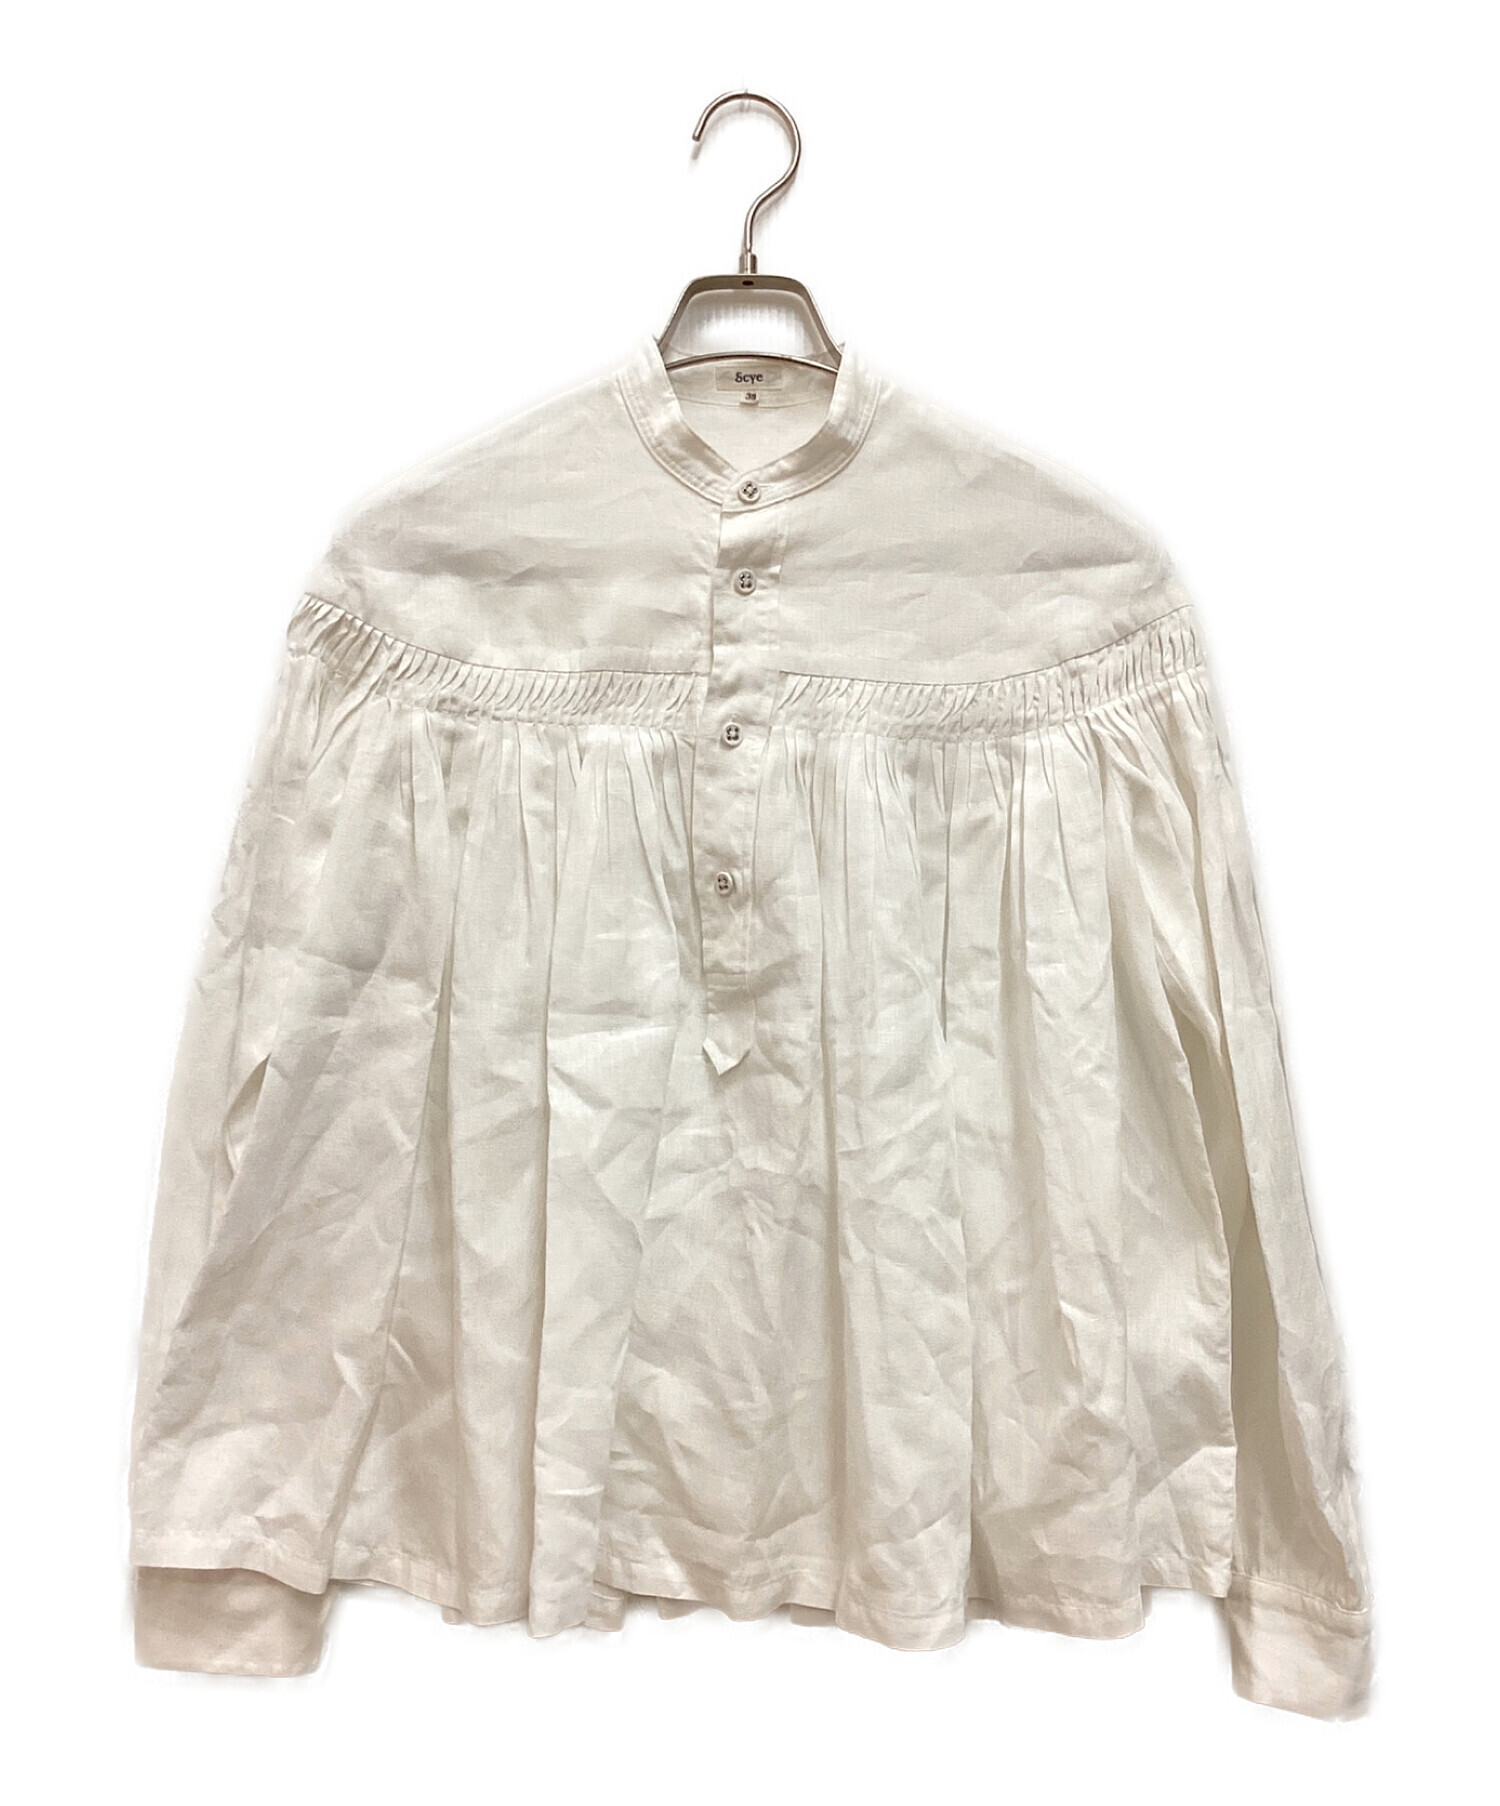 Scye サイ　リネン タックシャツ　ホワイト38サイズ